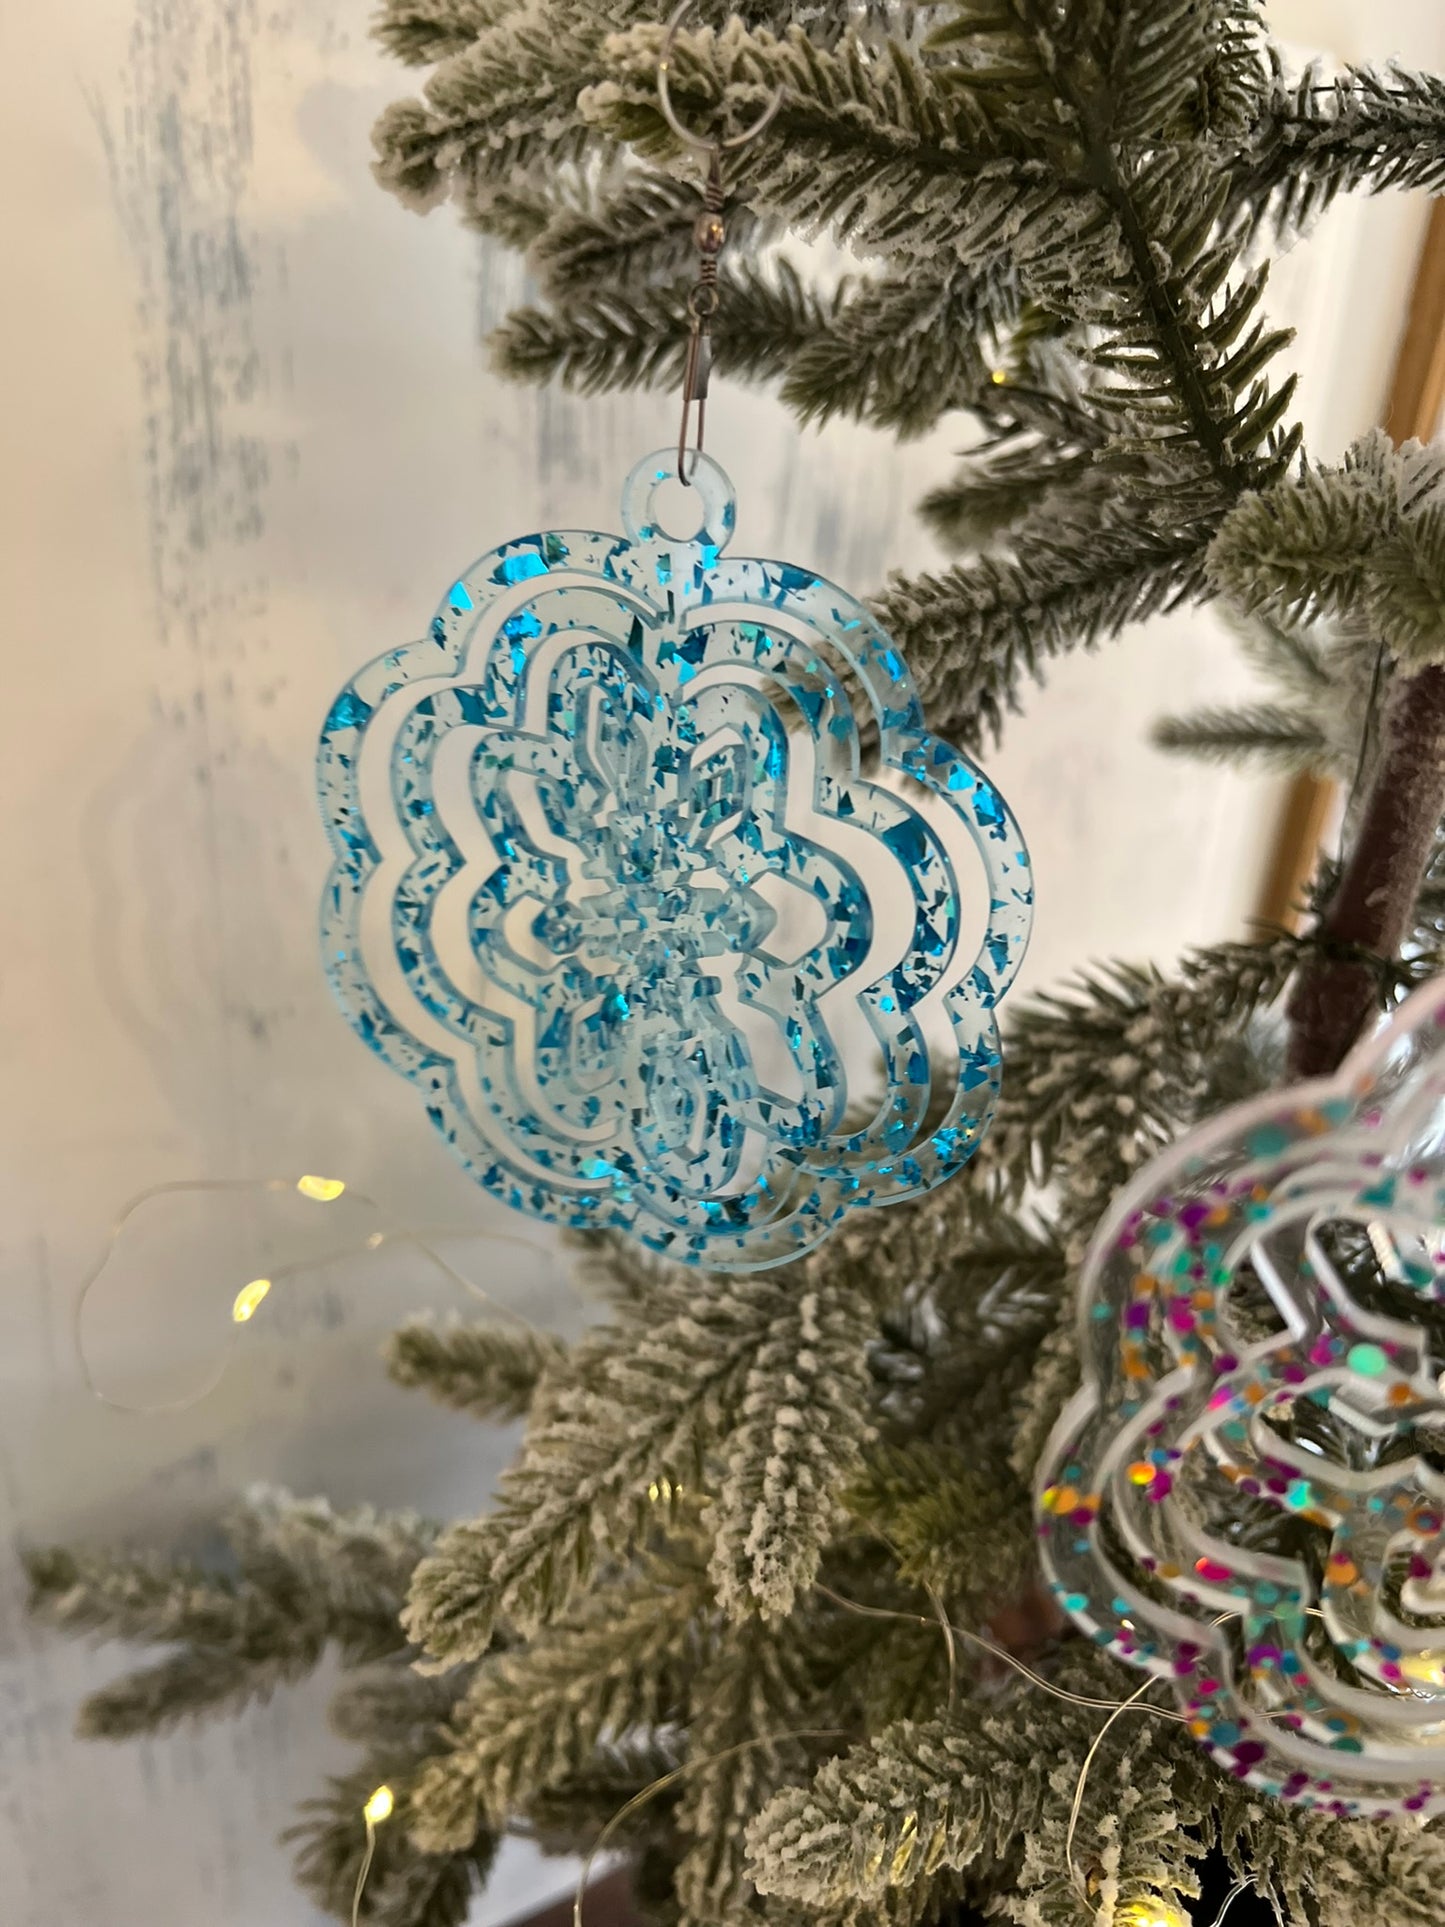 Laser Cut File - Acrylic Spinner Ornaments - Digital Download